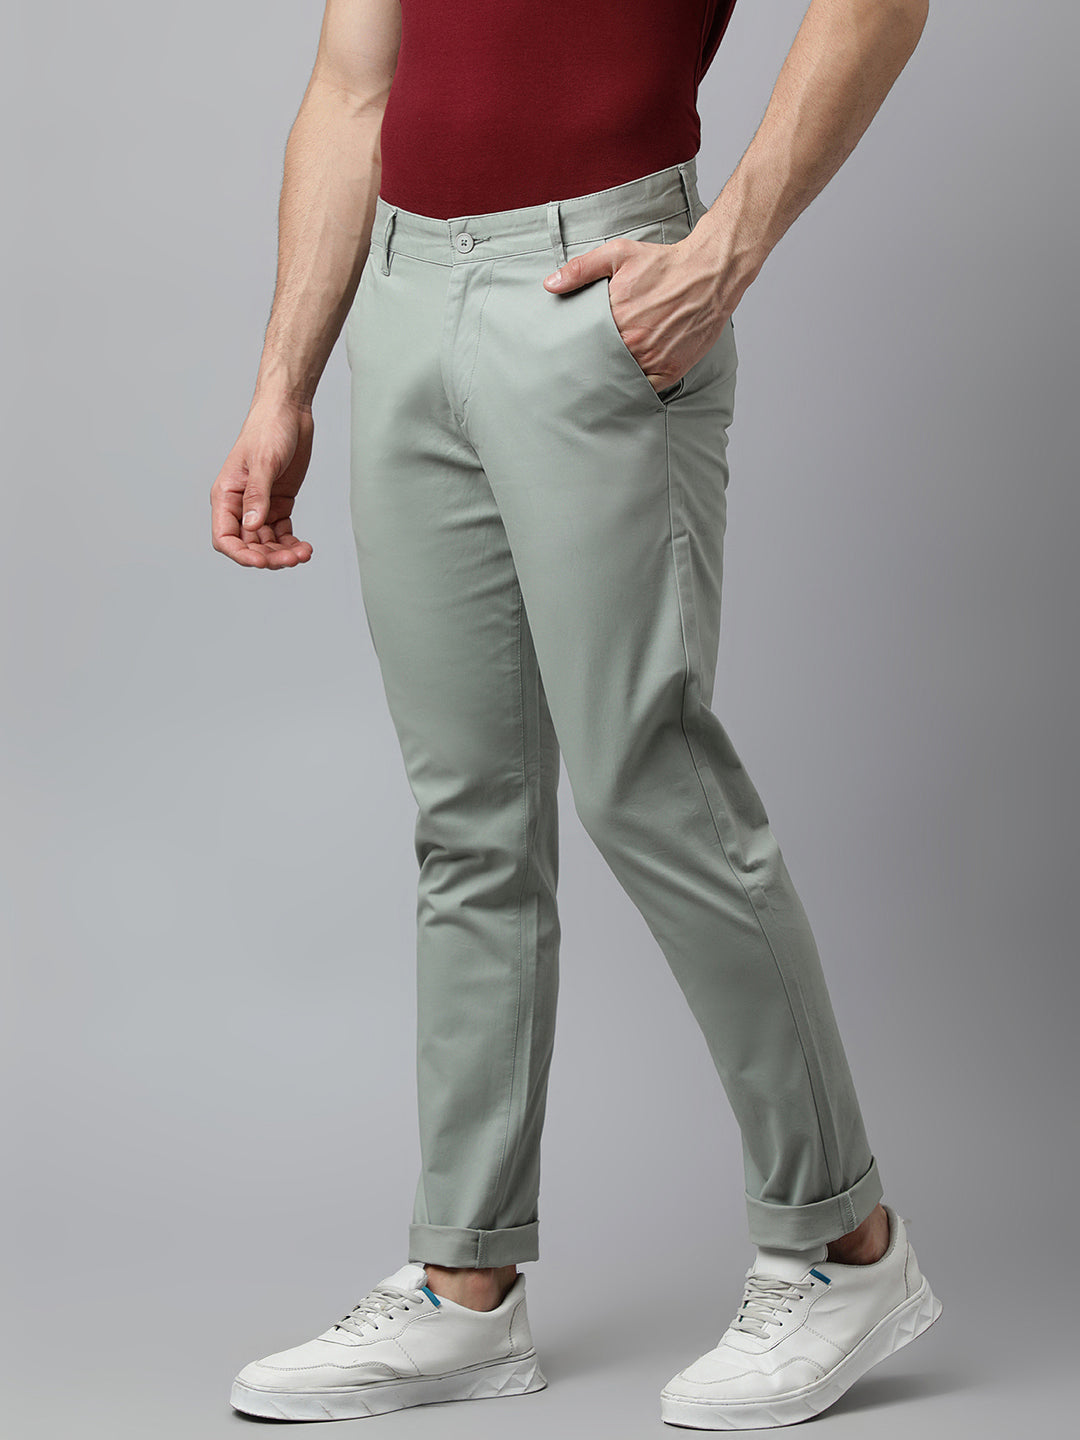 DASSY® Liverpool Women Work trousers